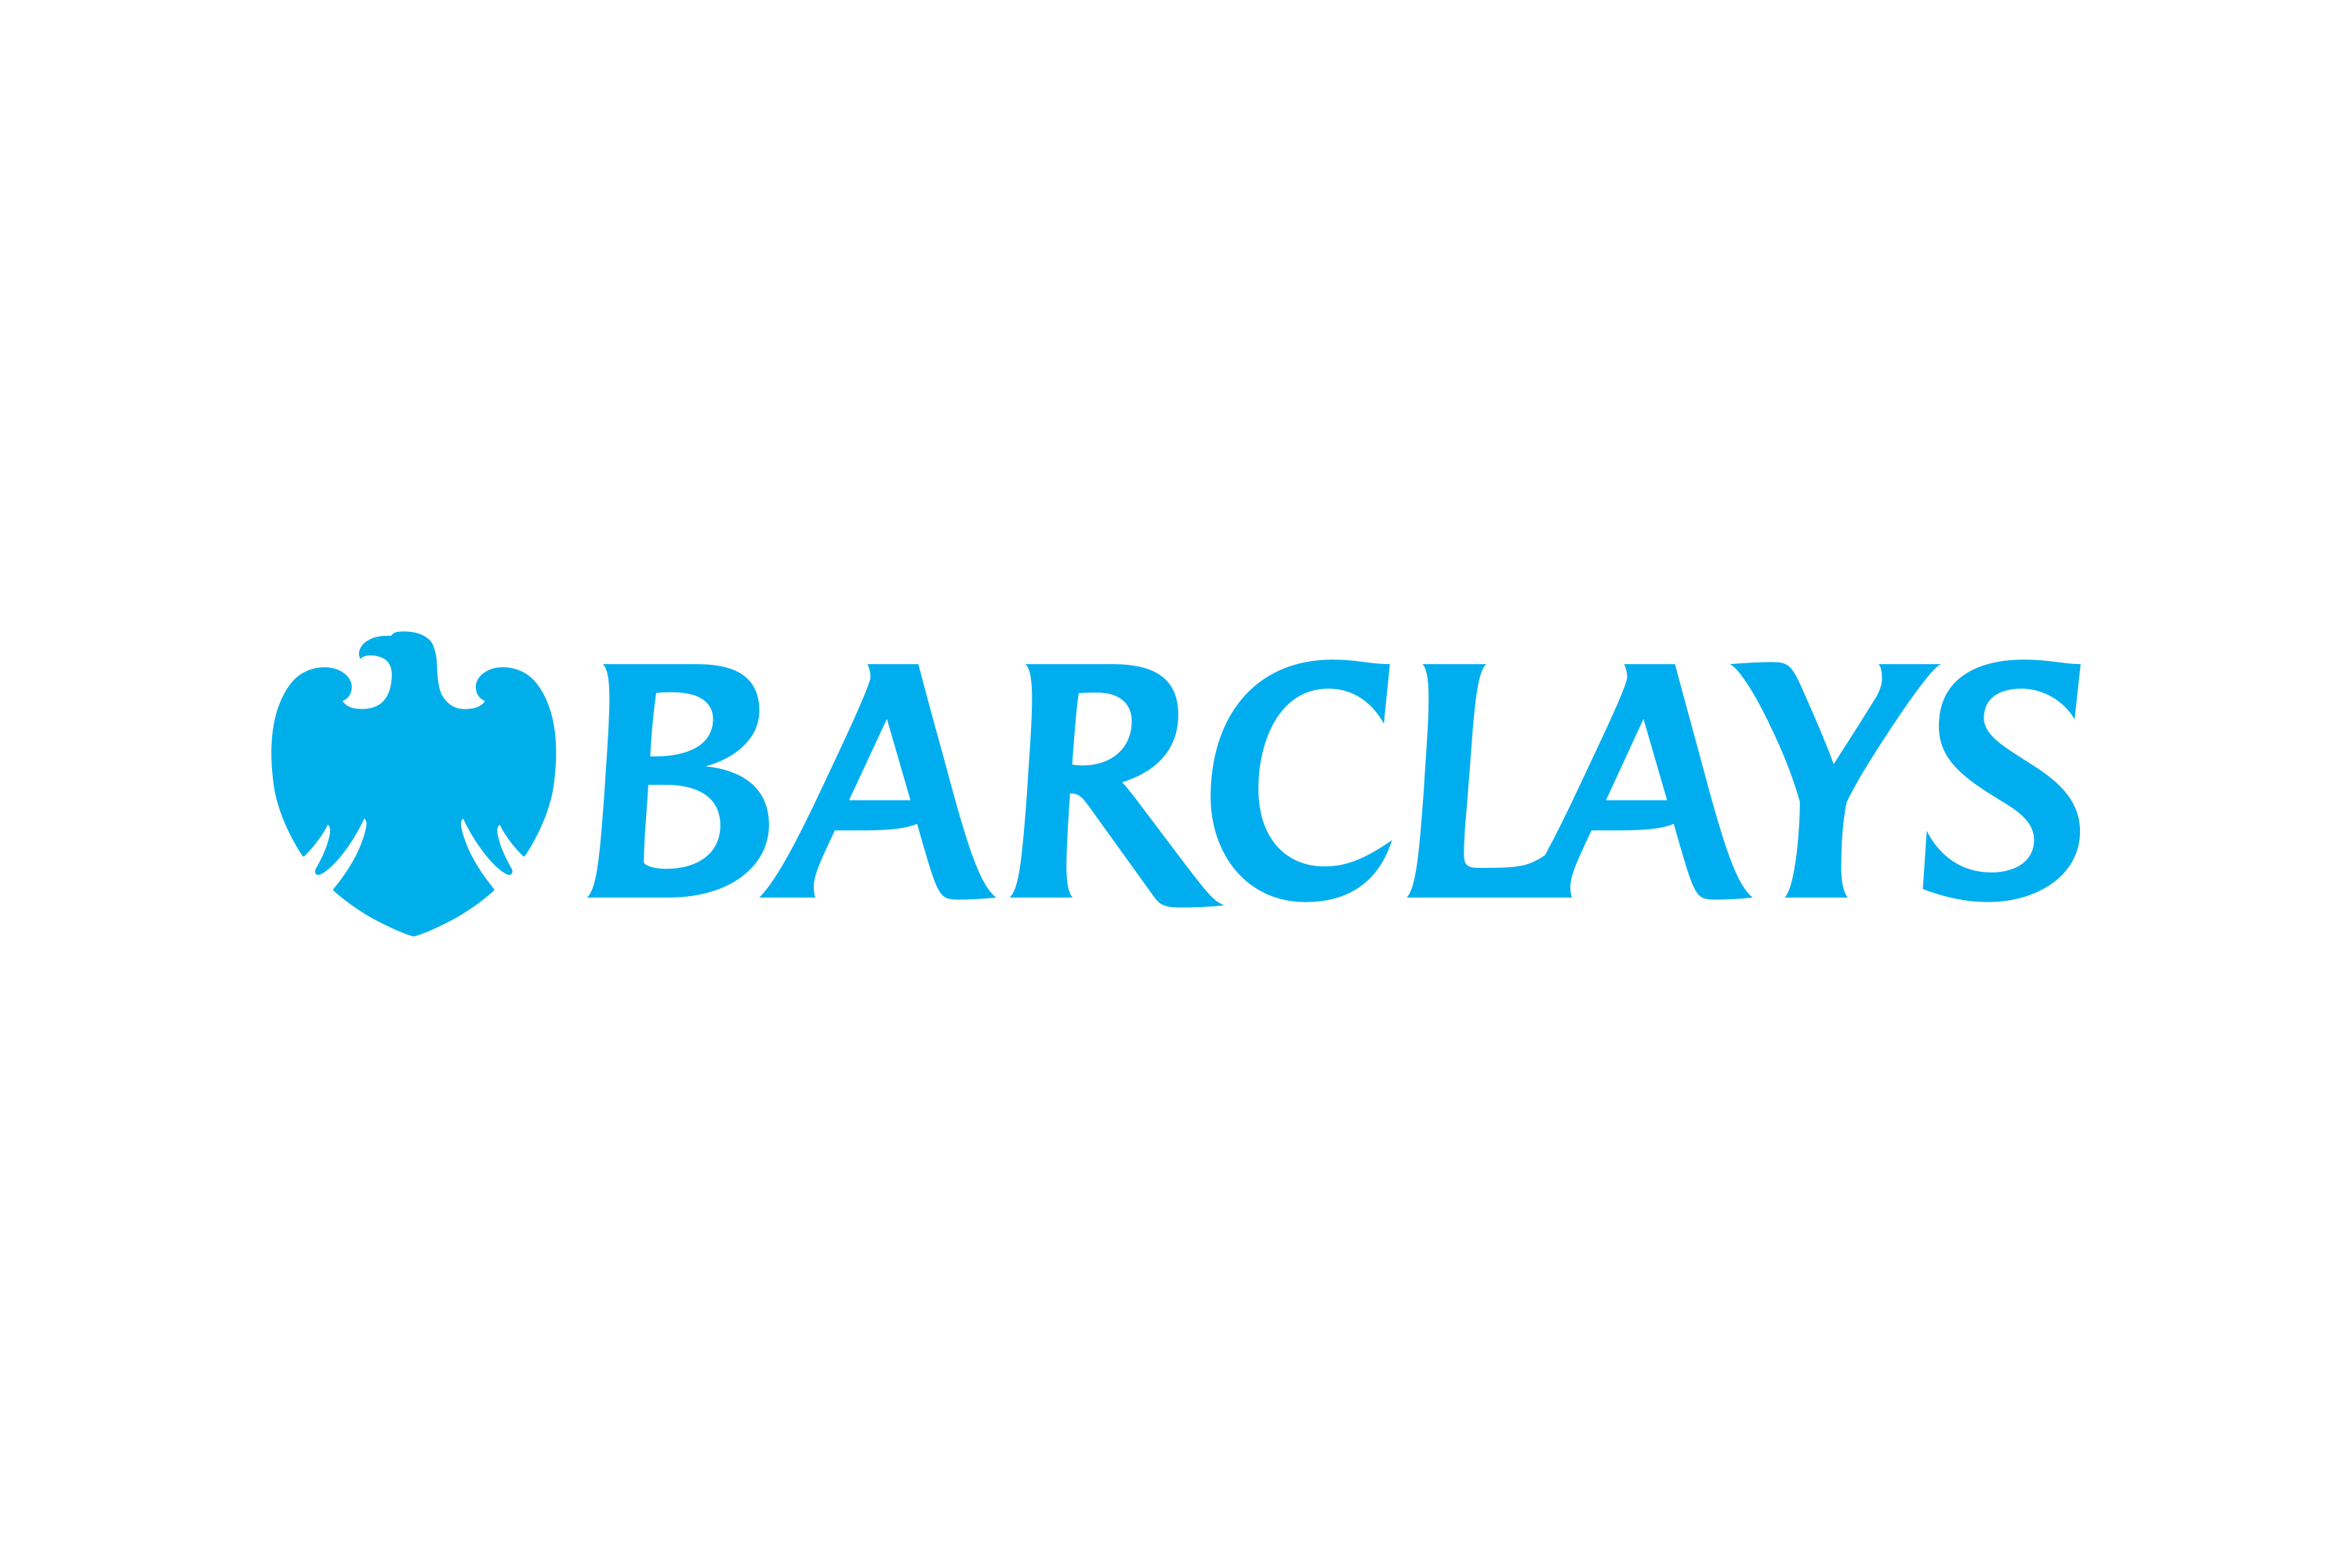 Download Barclays Logo in SVG Vector or PNG File Format - Logo.wine